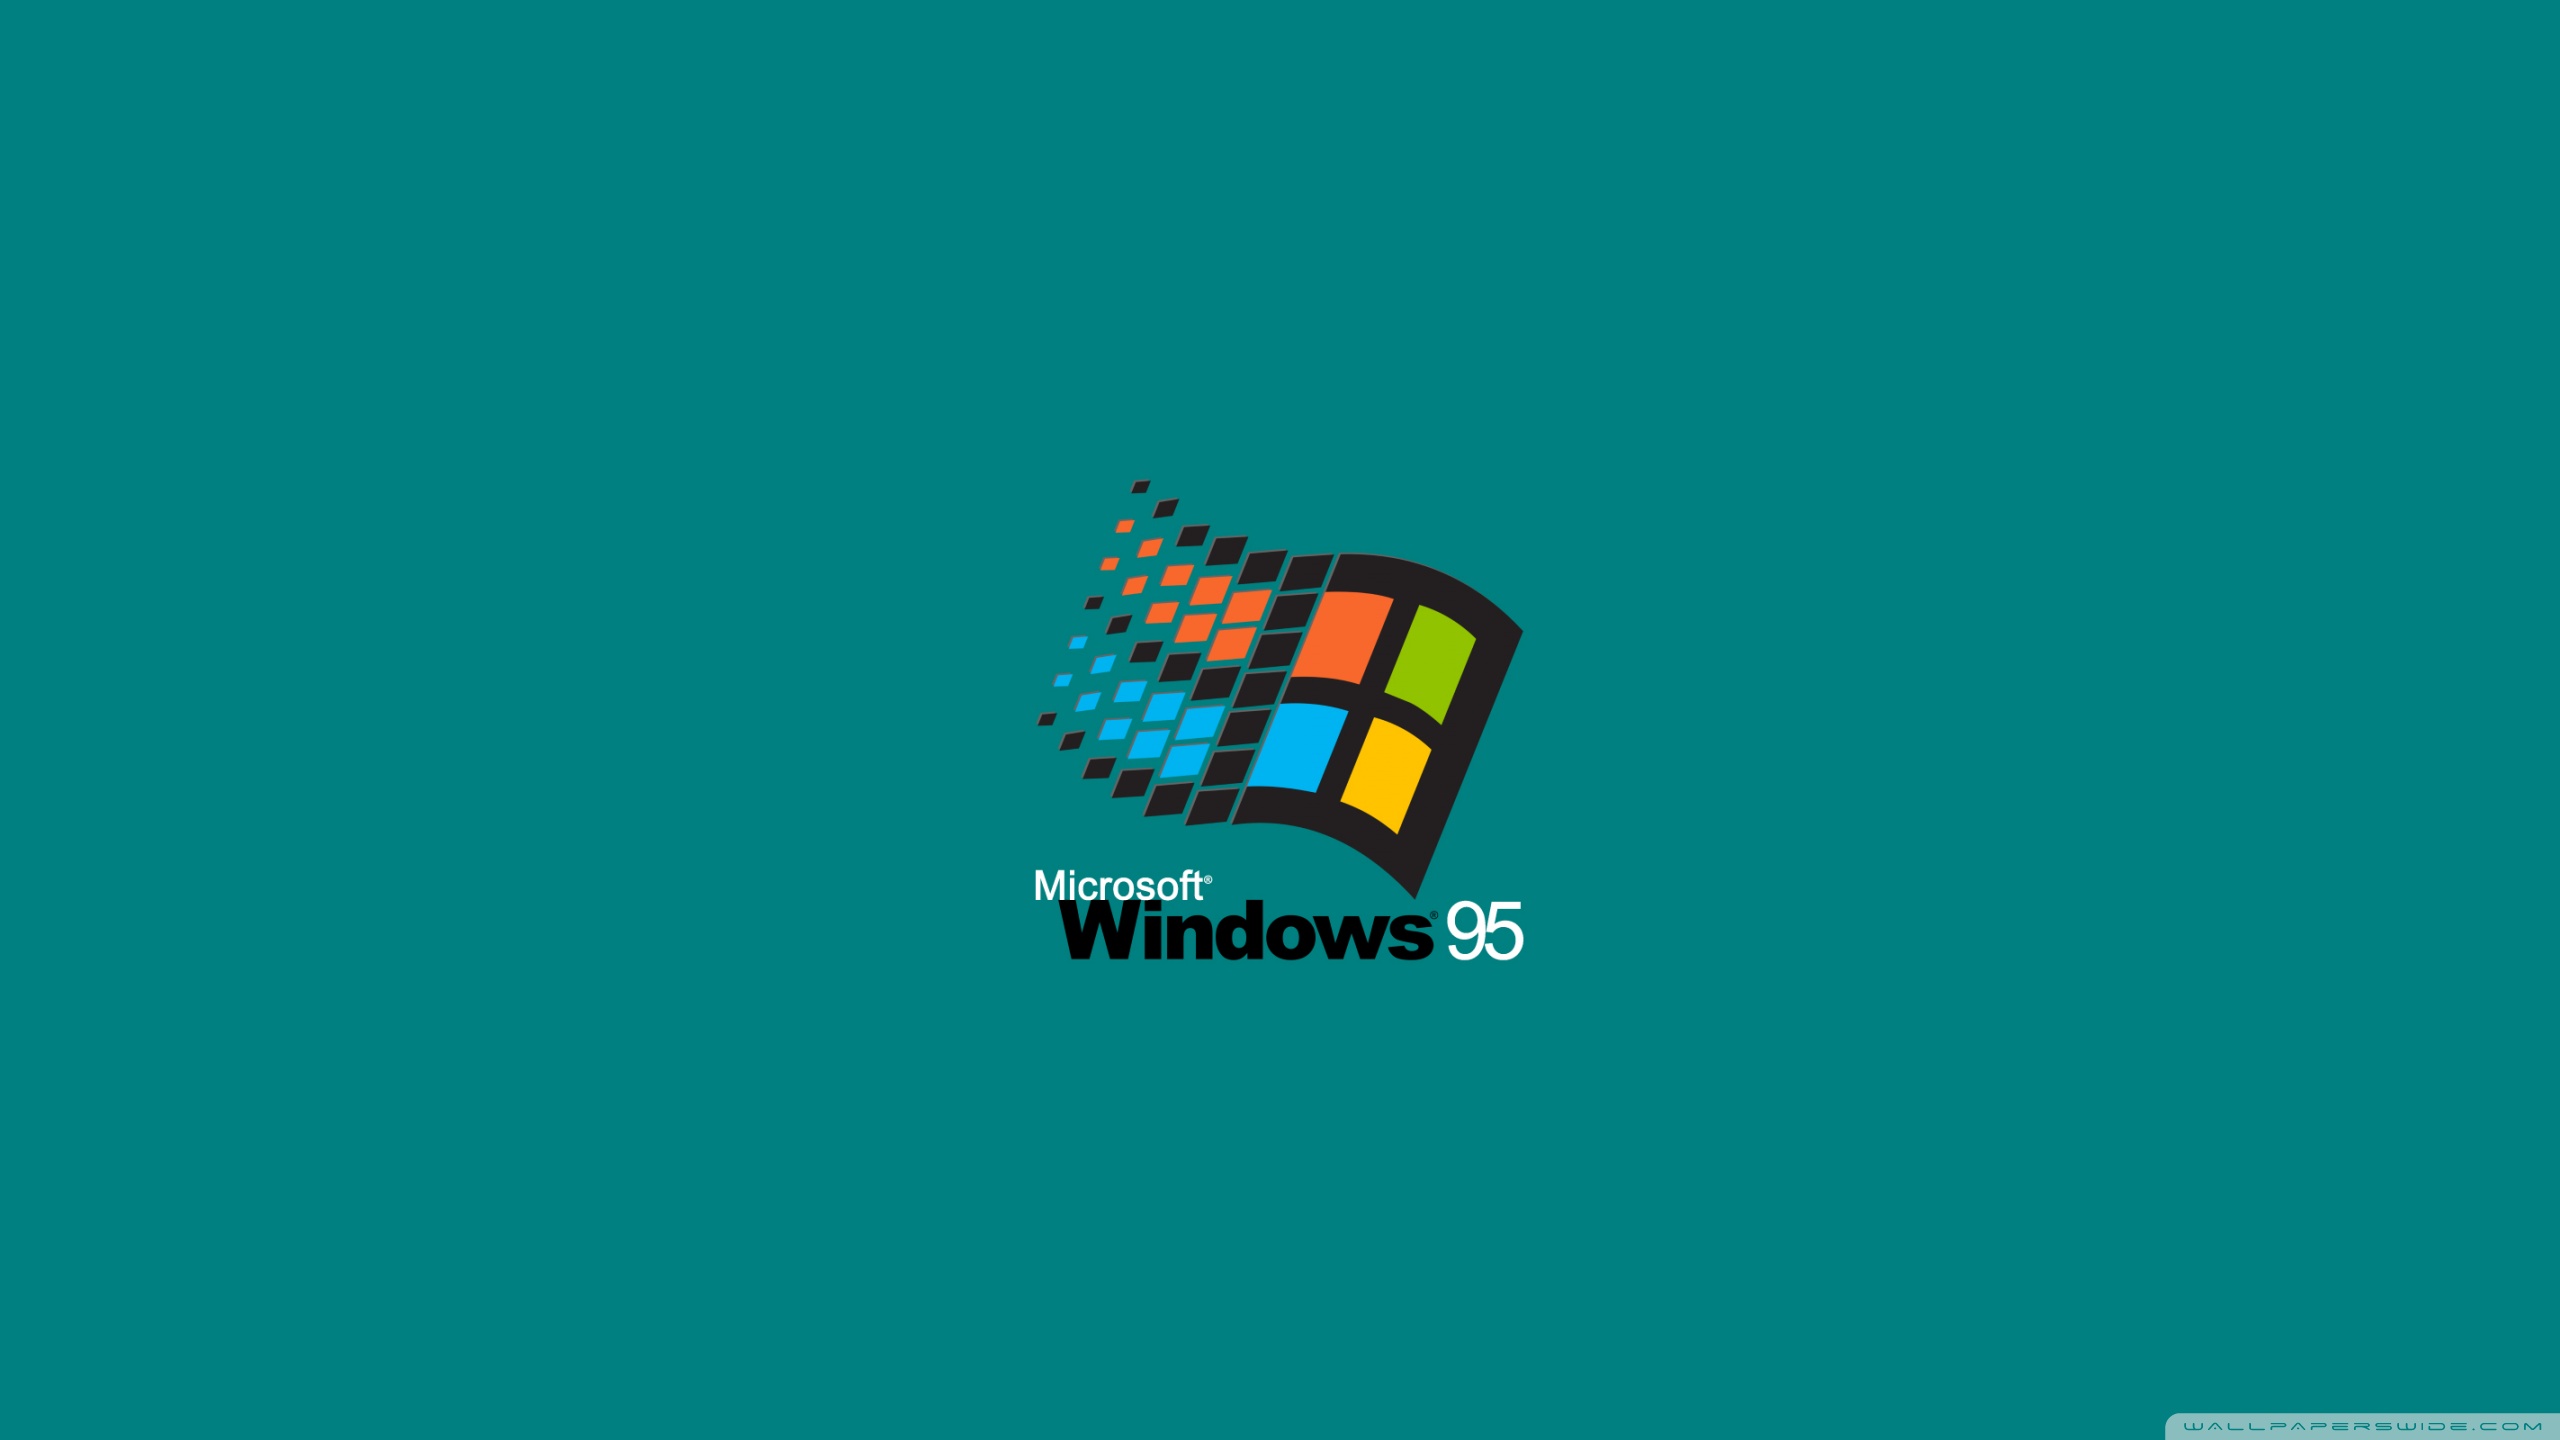 Microsoft Windows 95 Ultra Hd Desktop Background Wallpaper For Widescreen Ultrawide Desktop Laptop Multi Display Dual Monitor Tablet Smartphone